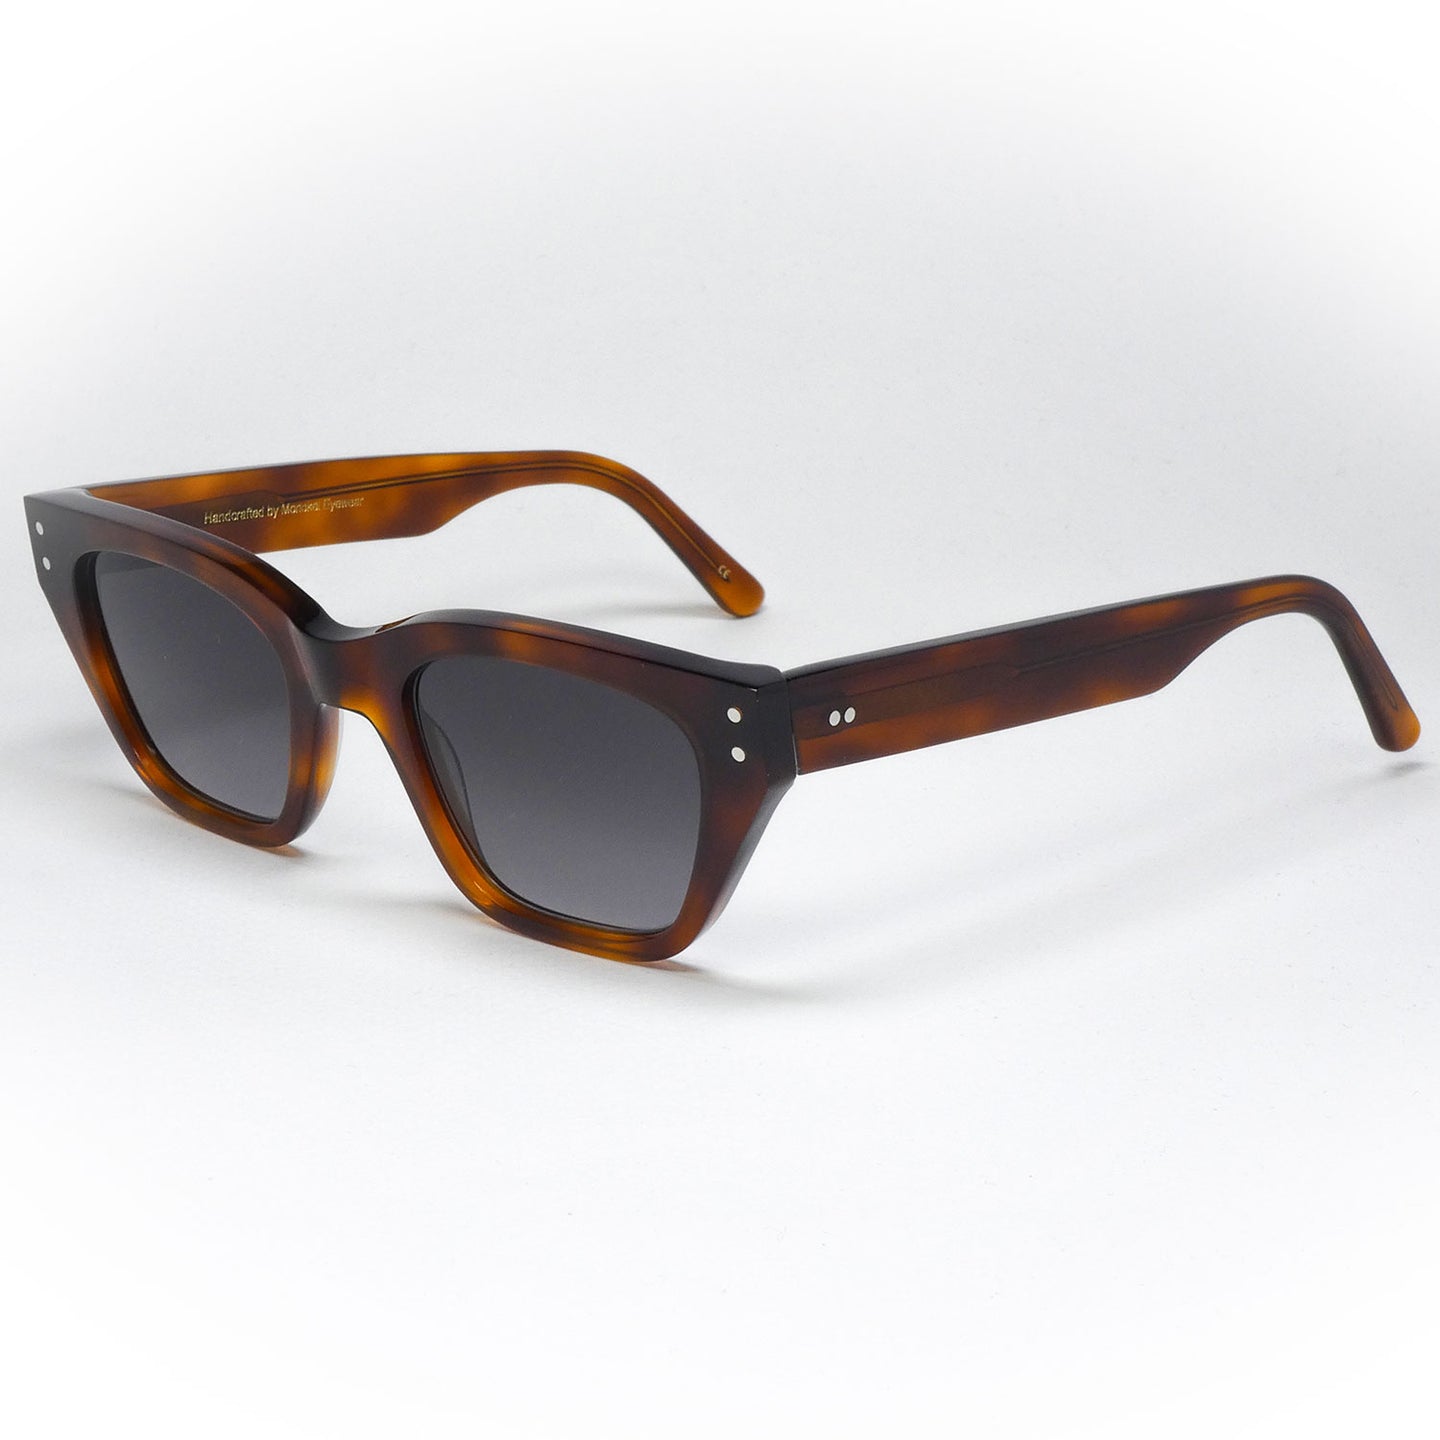 sunglasses monokel model memphis color amber angled view